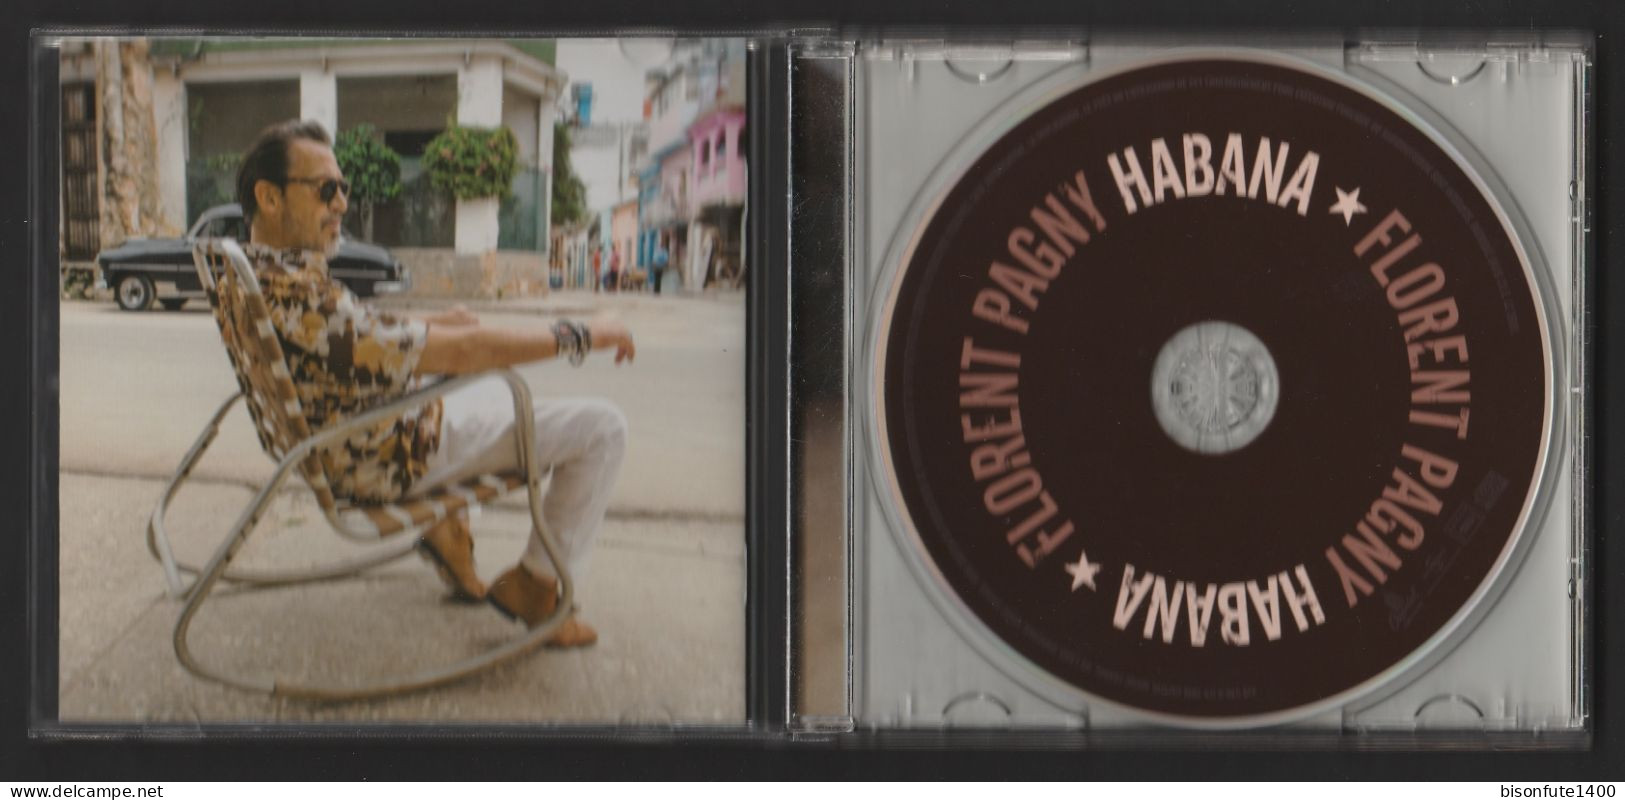 Album CD Florent PAGNY : "Habana" De 2016 Avec 10 Titres (Voir Photos) - Sonstige - Spanische Musik